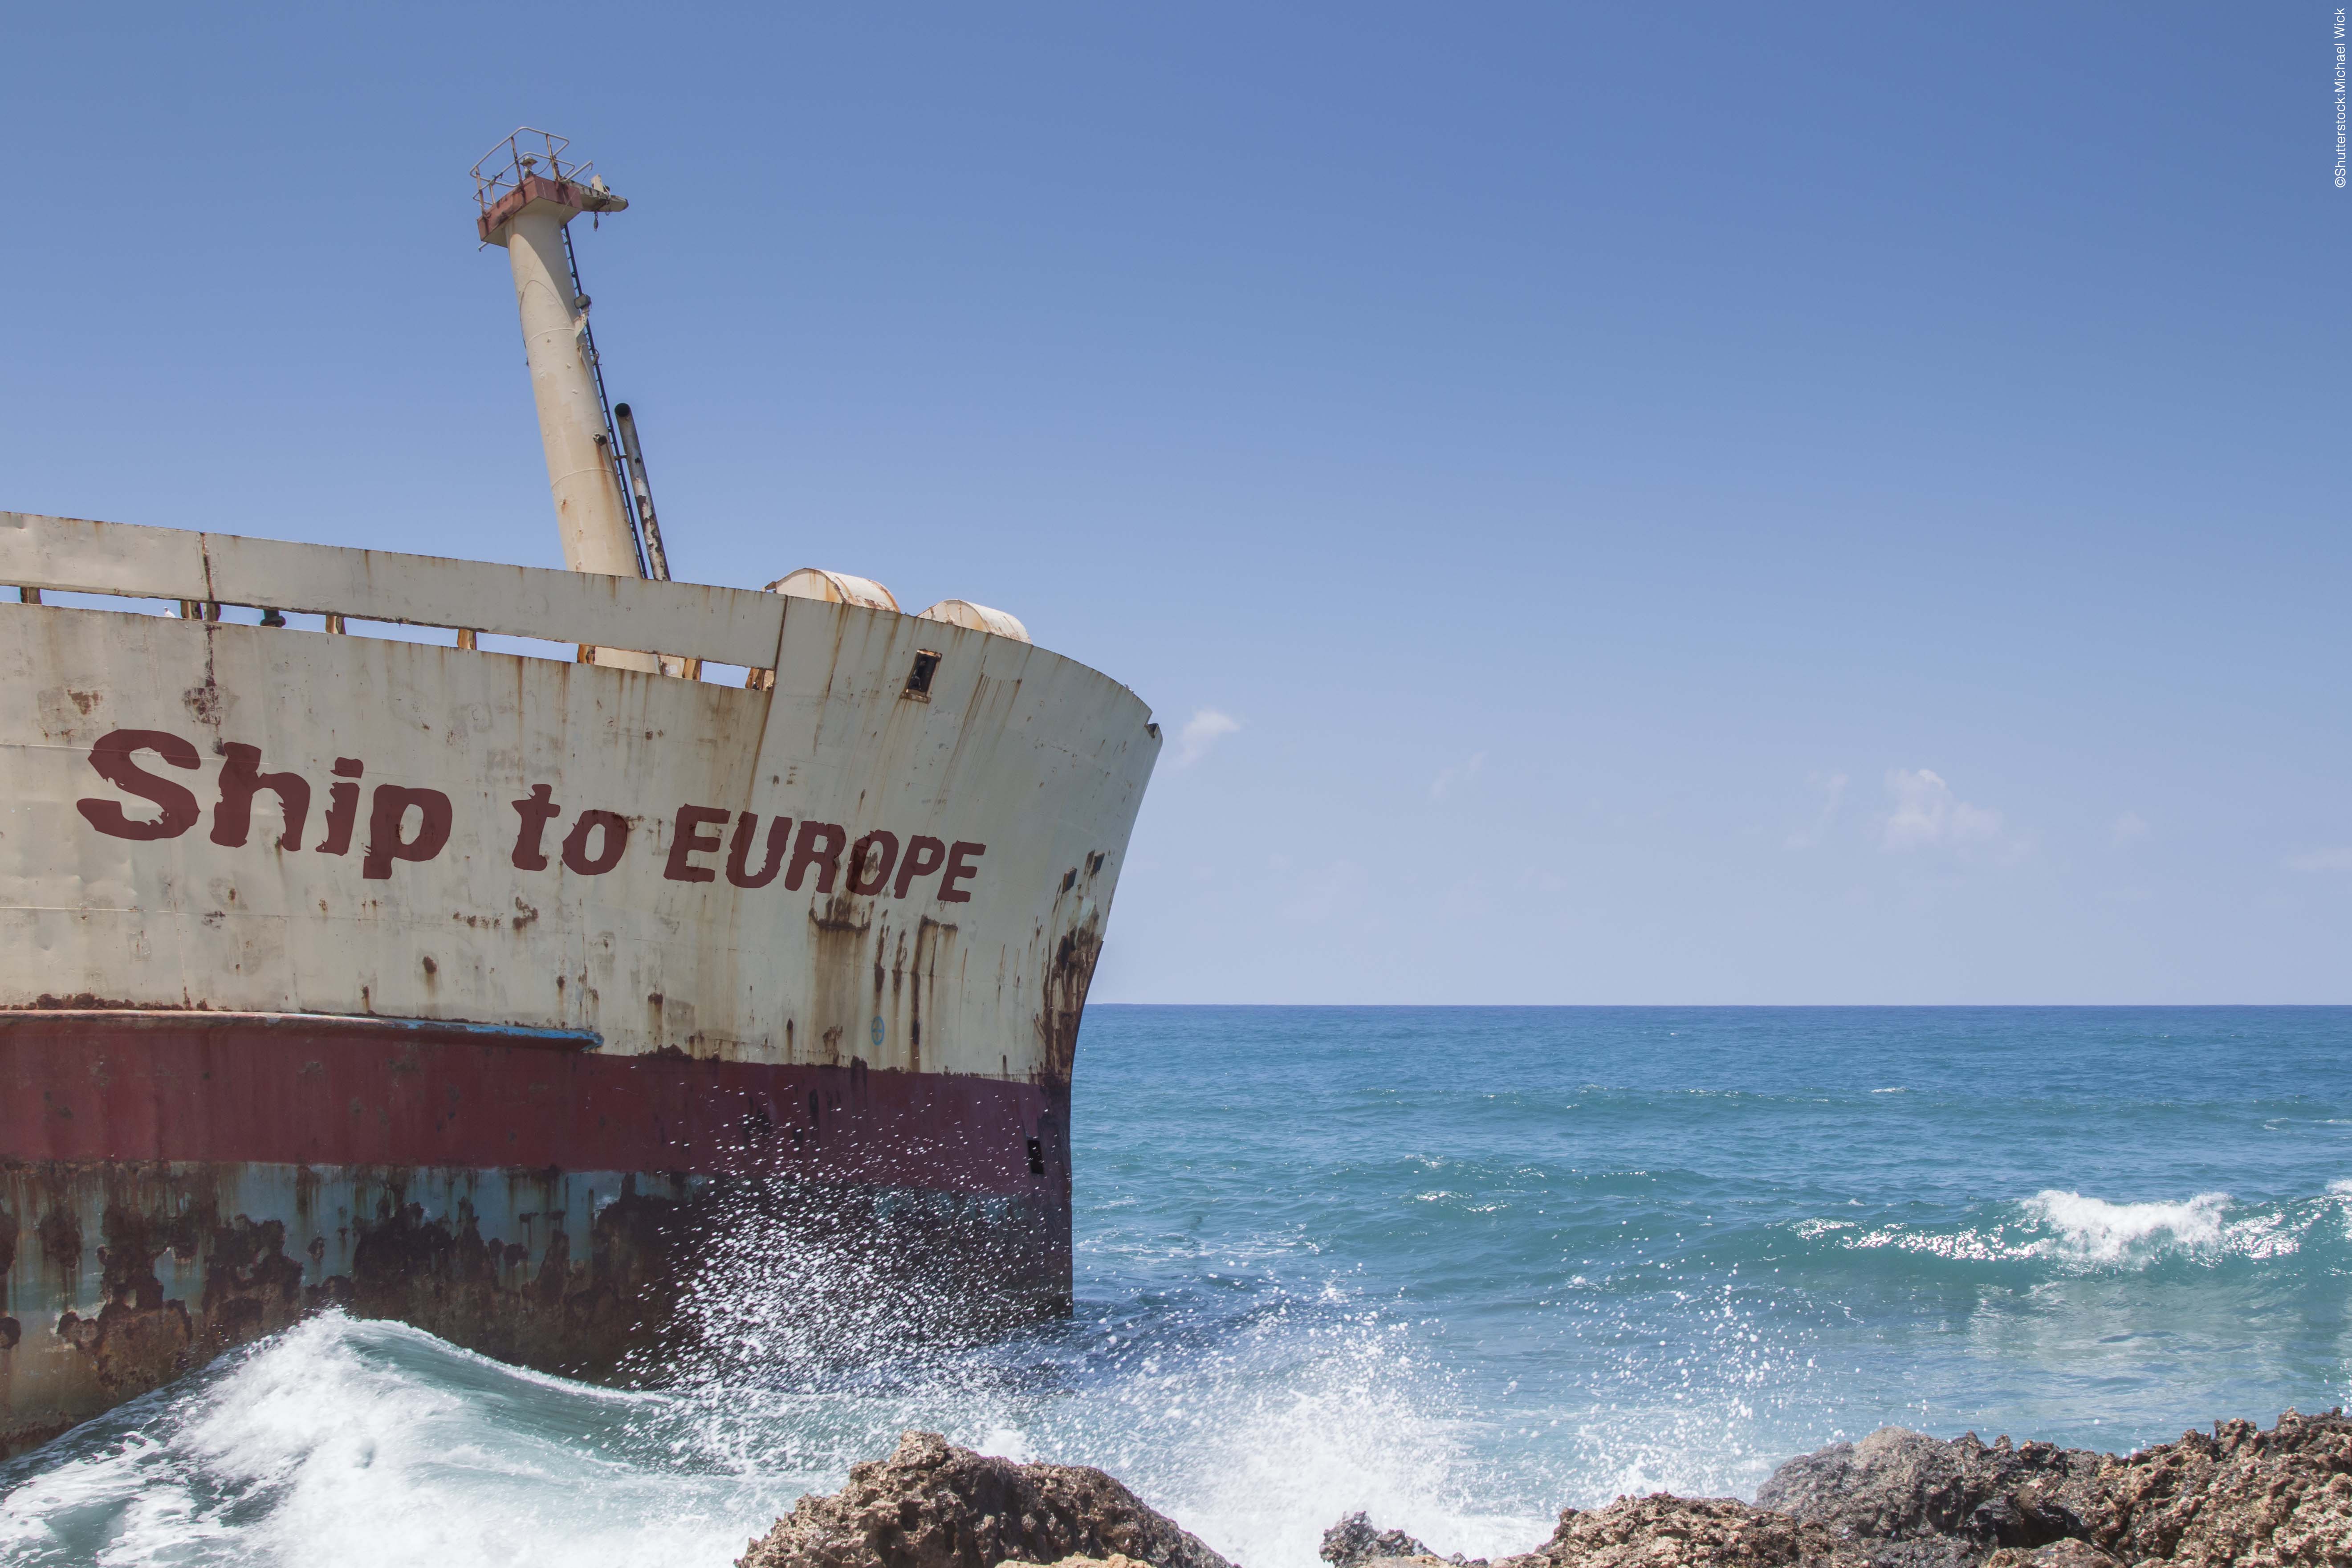 Кораблекрушения в Средиземном море 2015 года. Судно Европа. Слова с ship.